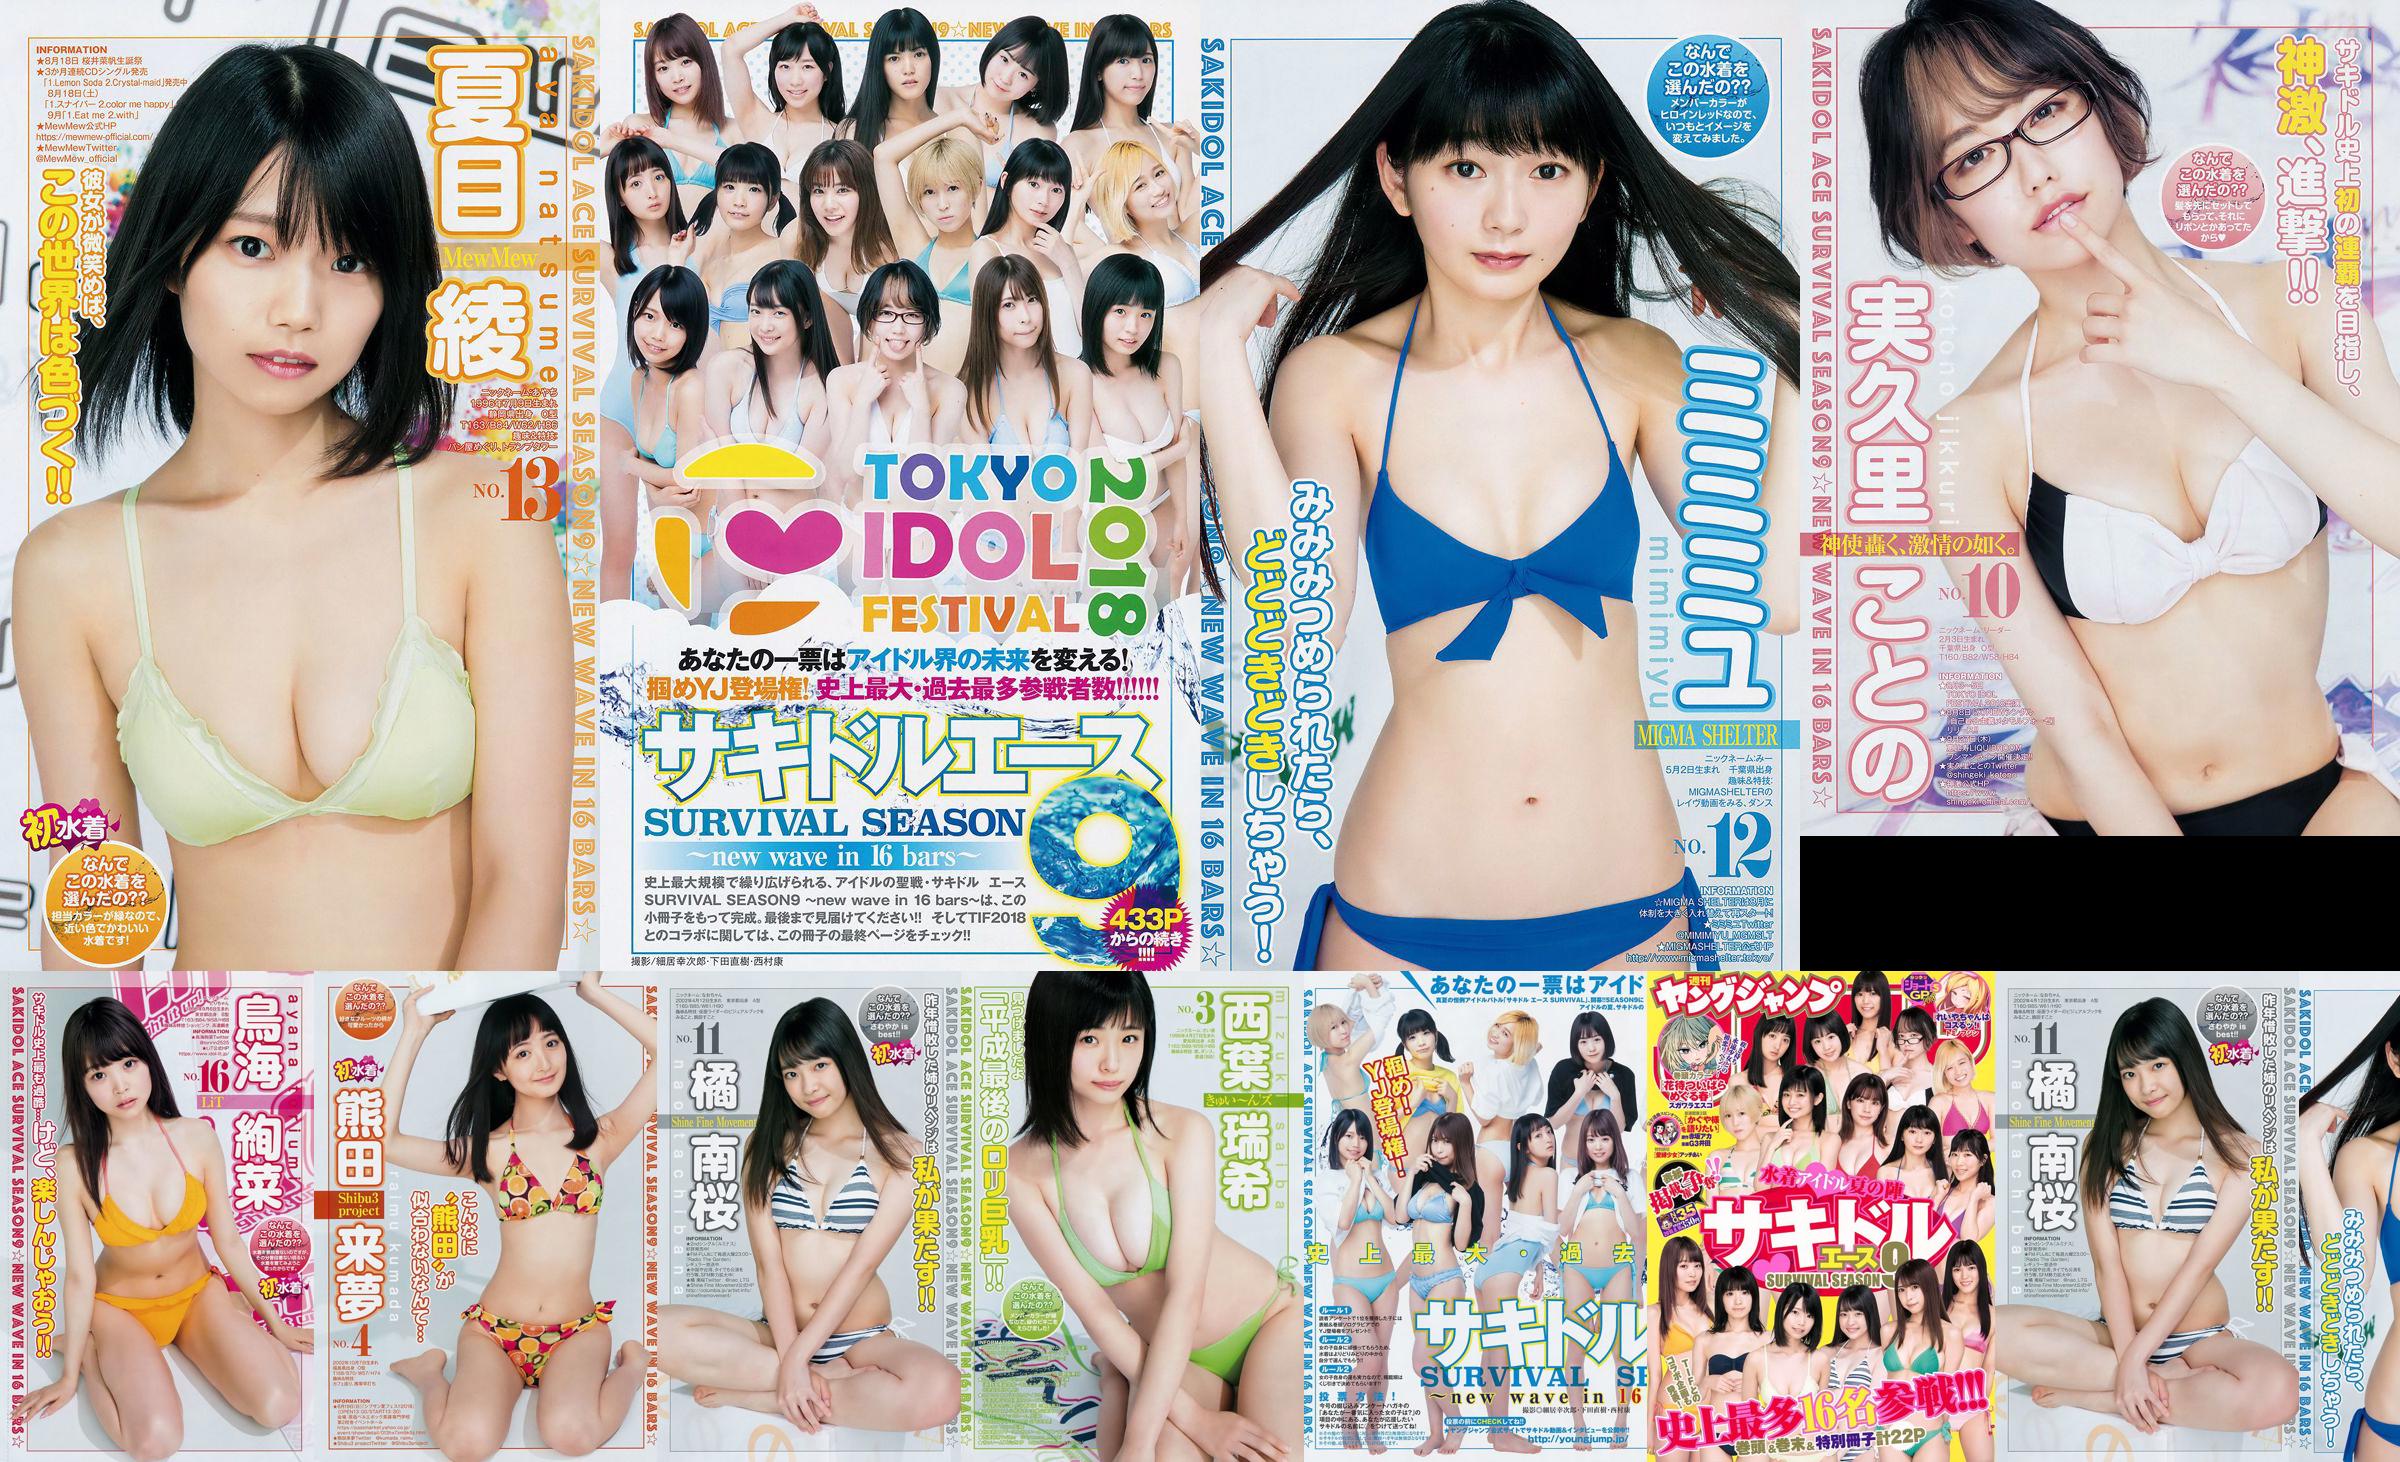 [FLASH] Ikumi Hisamatsu Risa Hirako Ren Ishikawa Angel Moe AKB48 Kaho Shibuya Misuzu Hayashi Ririka 2015.04.21 Photo Toshi No.b4b918 Page 5